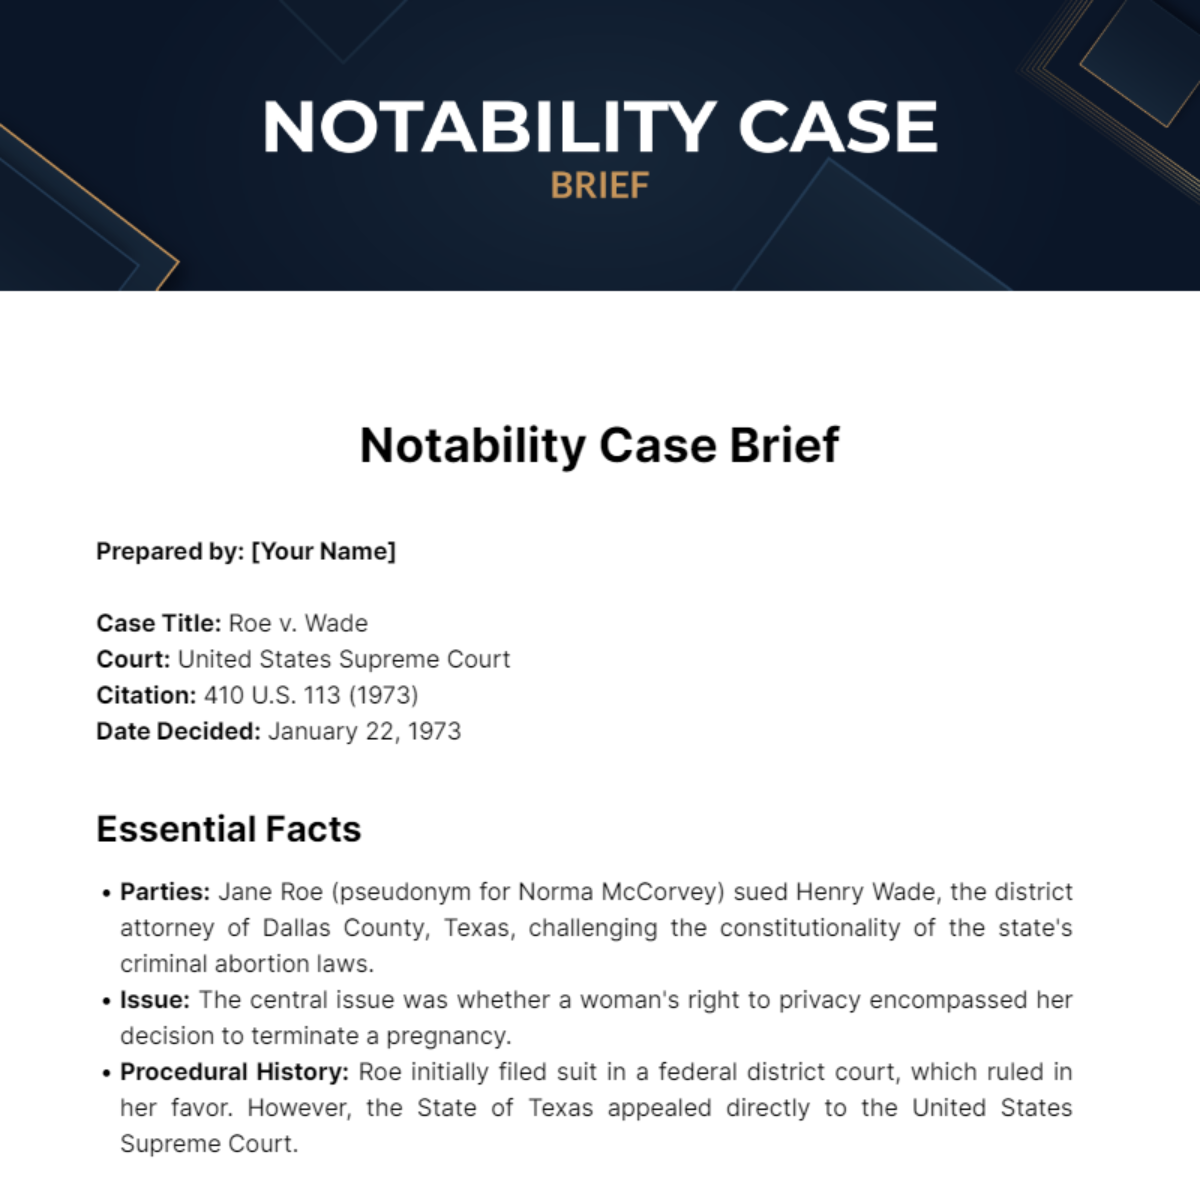 Notability Case Brief Template